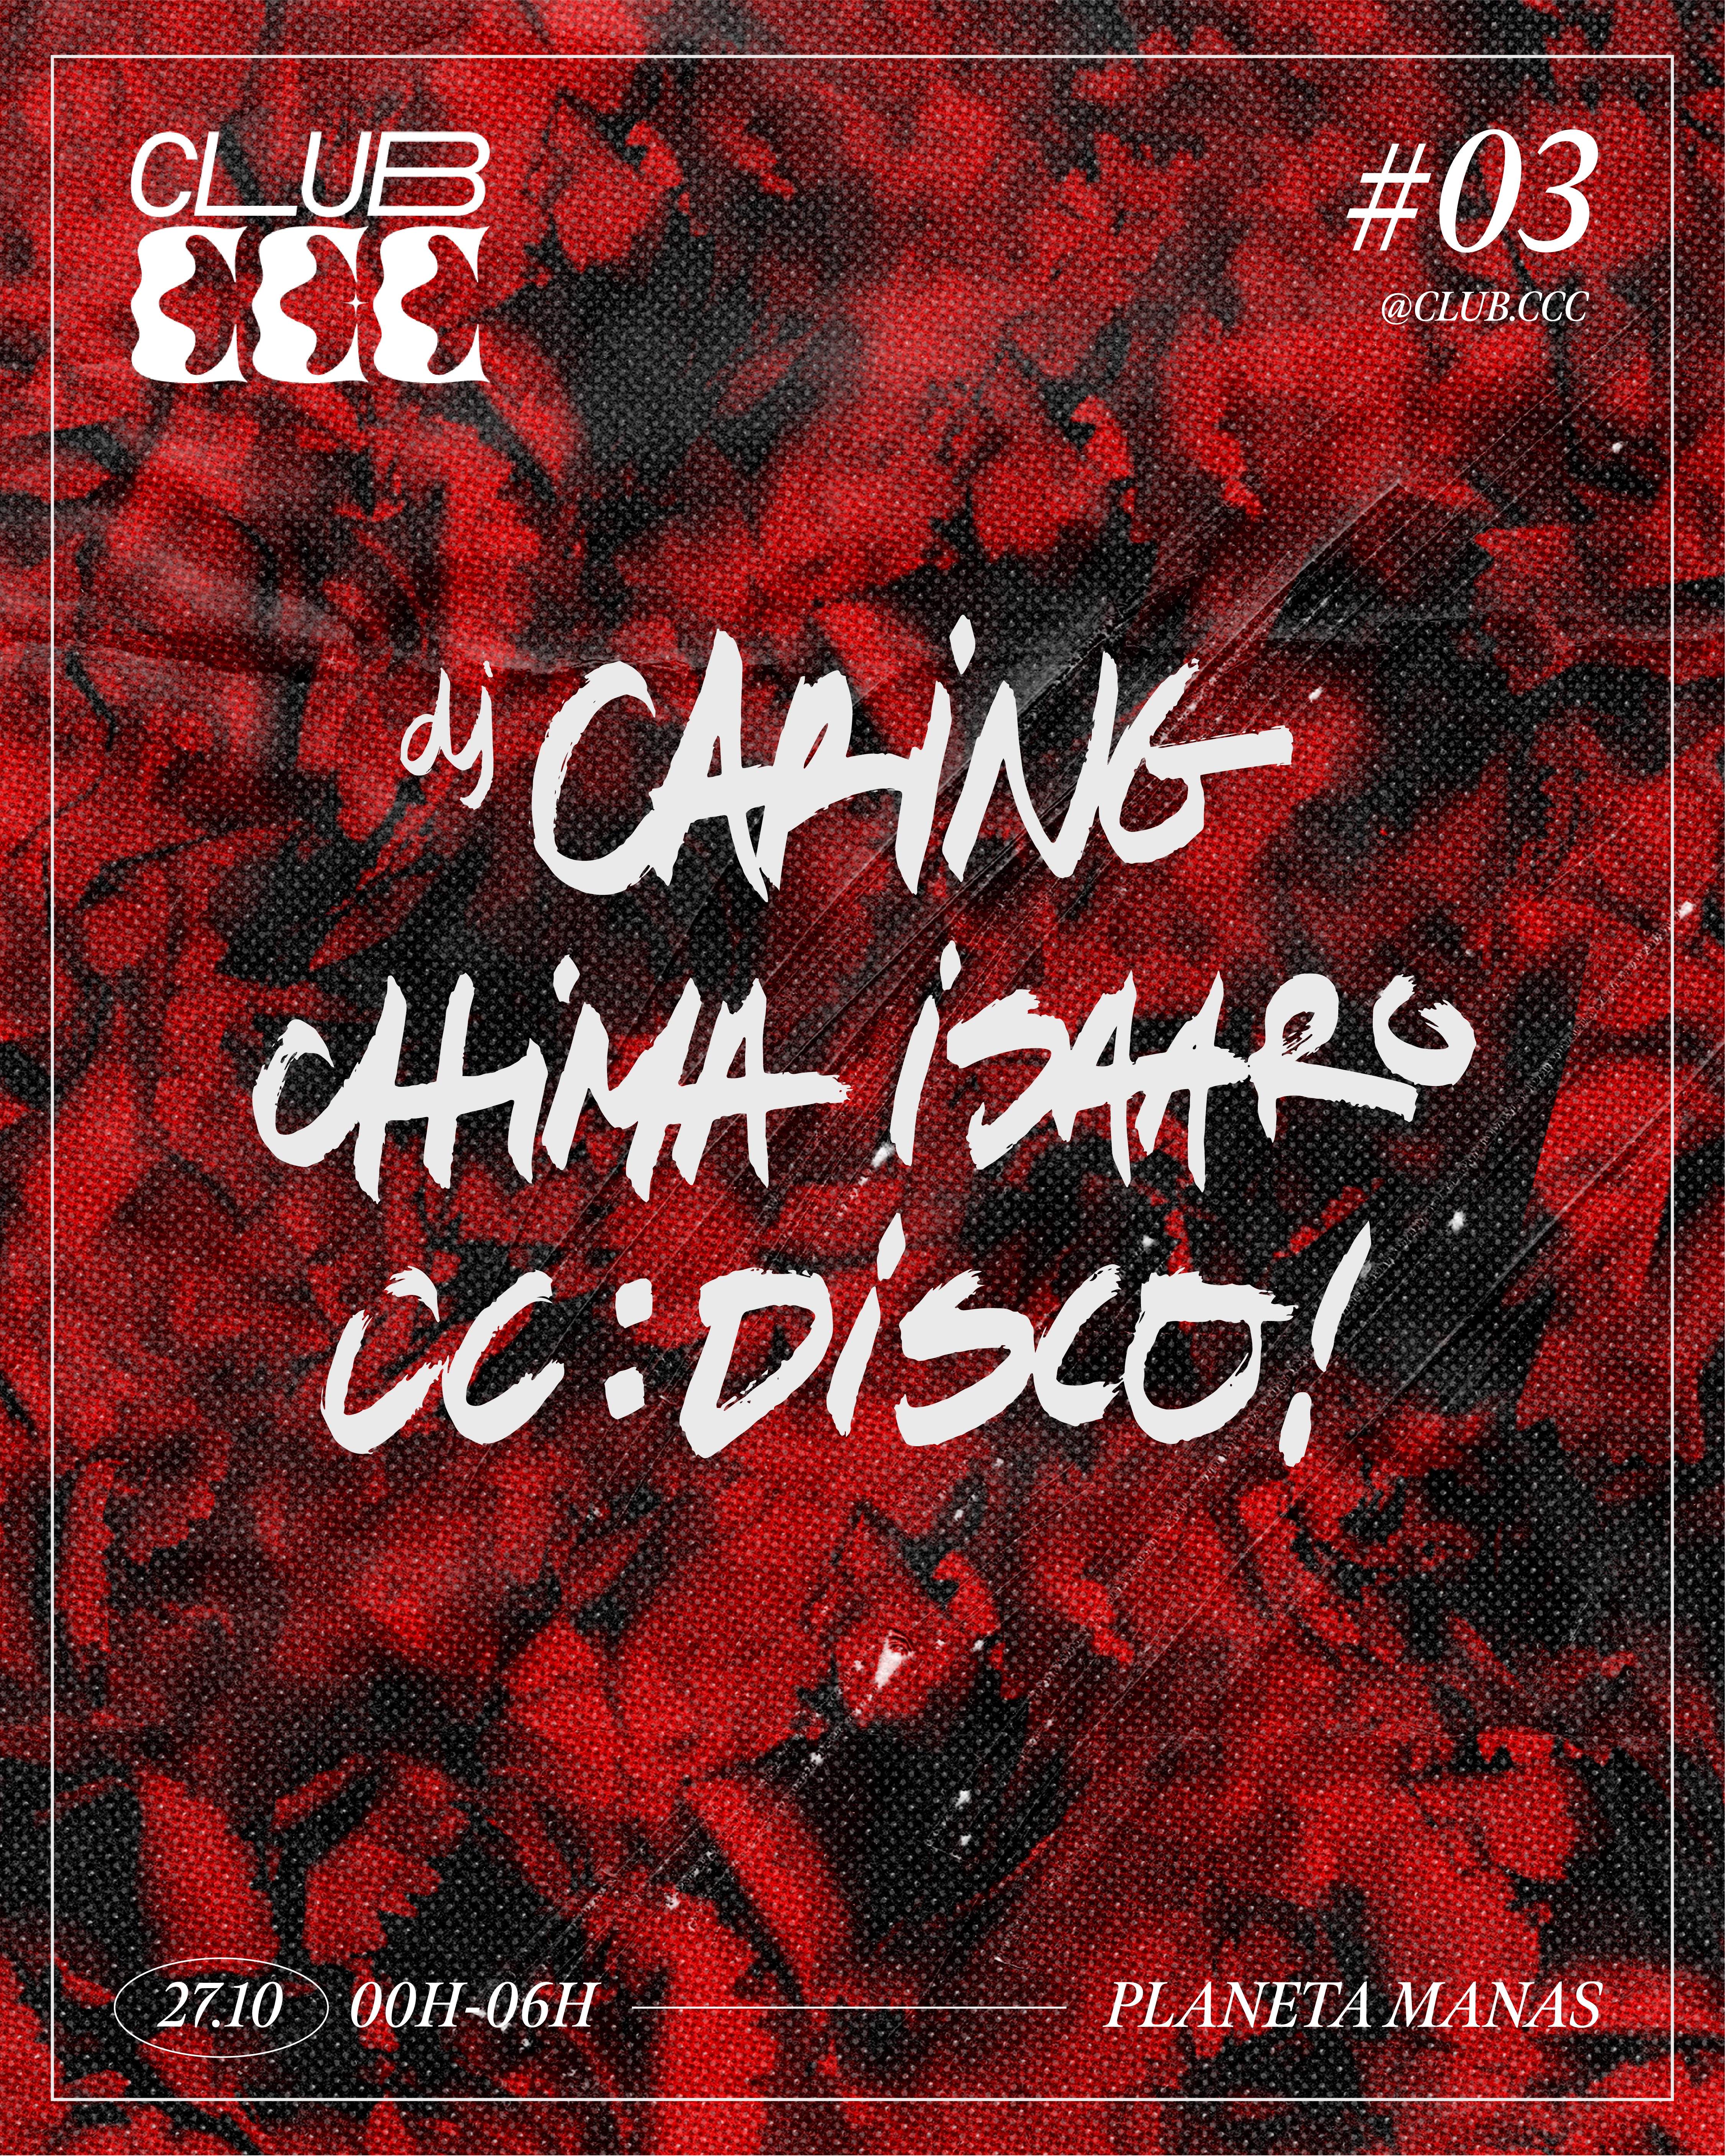 CLUB CCC  (CC:DISCO! , Chima Isaaro, DJ Caring) - Página frontal